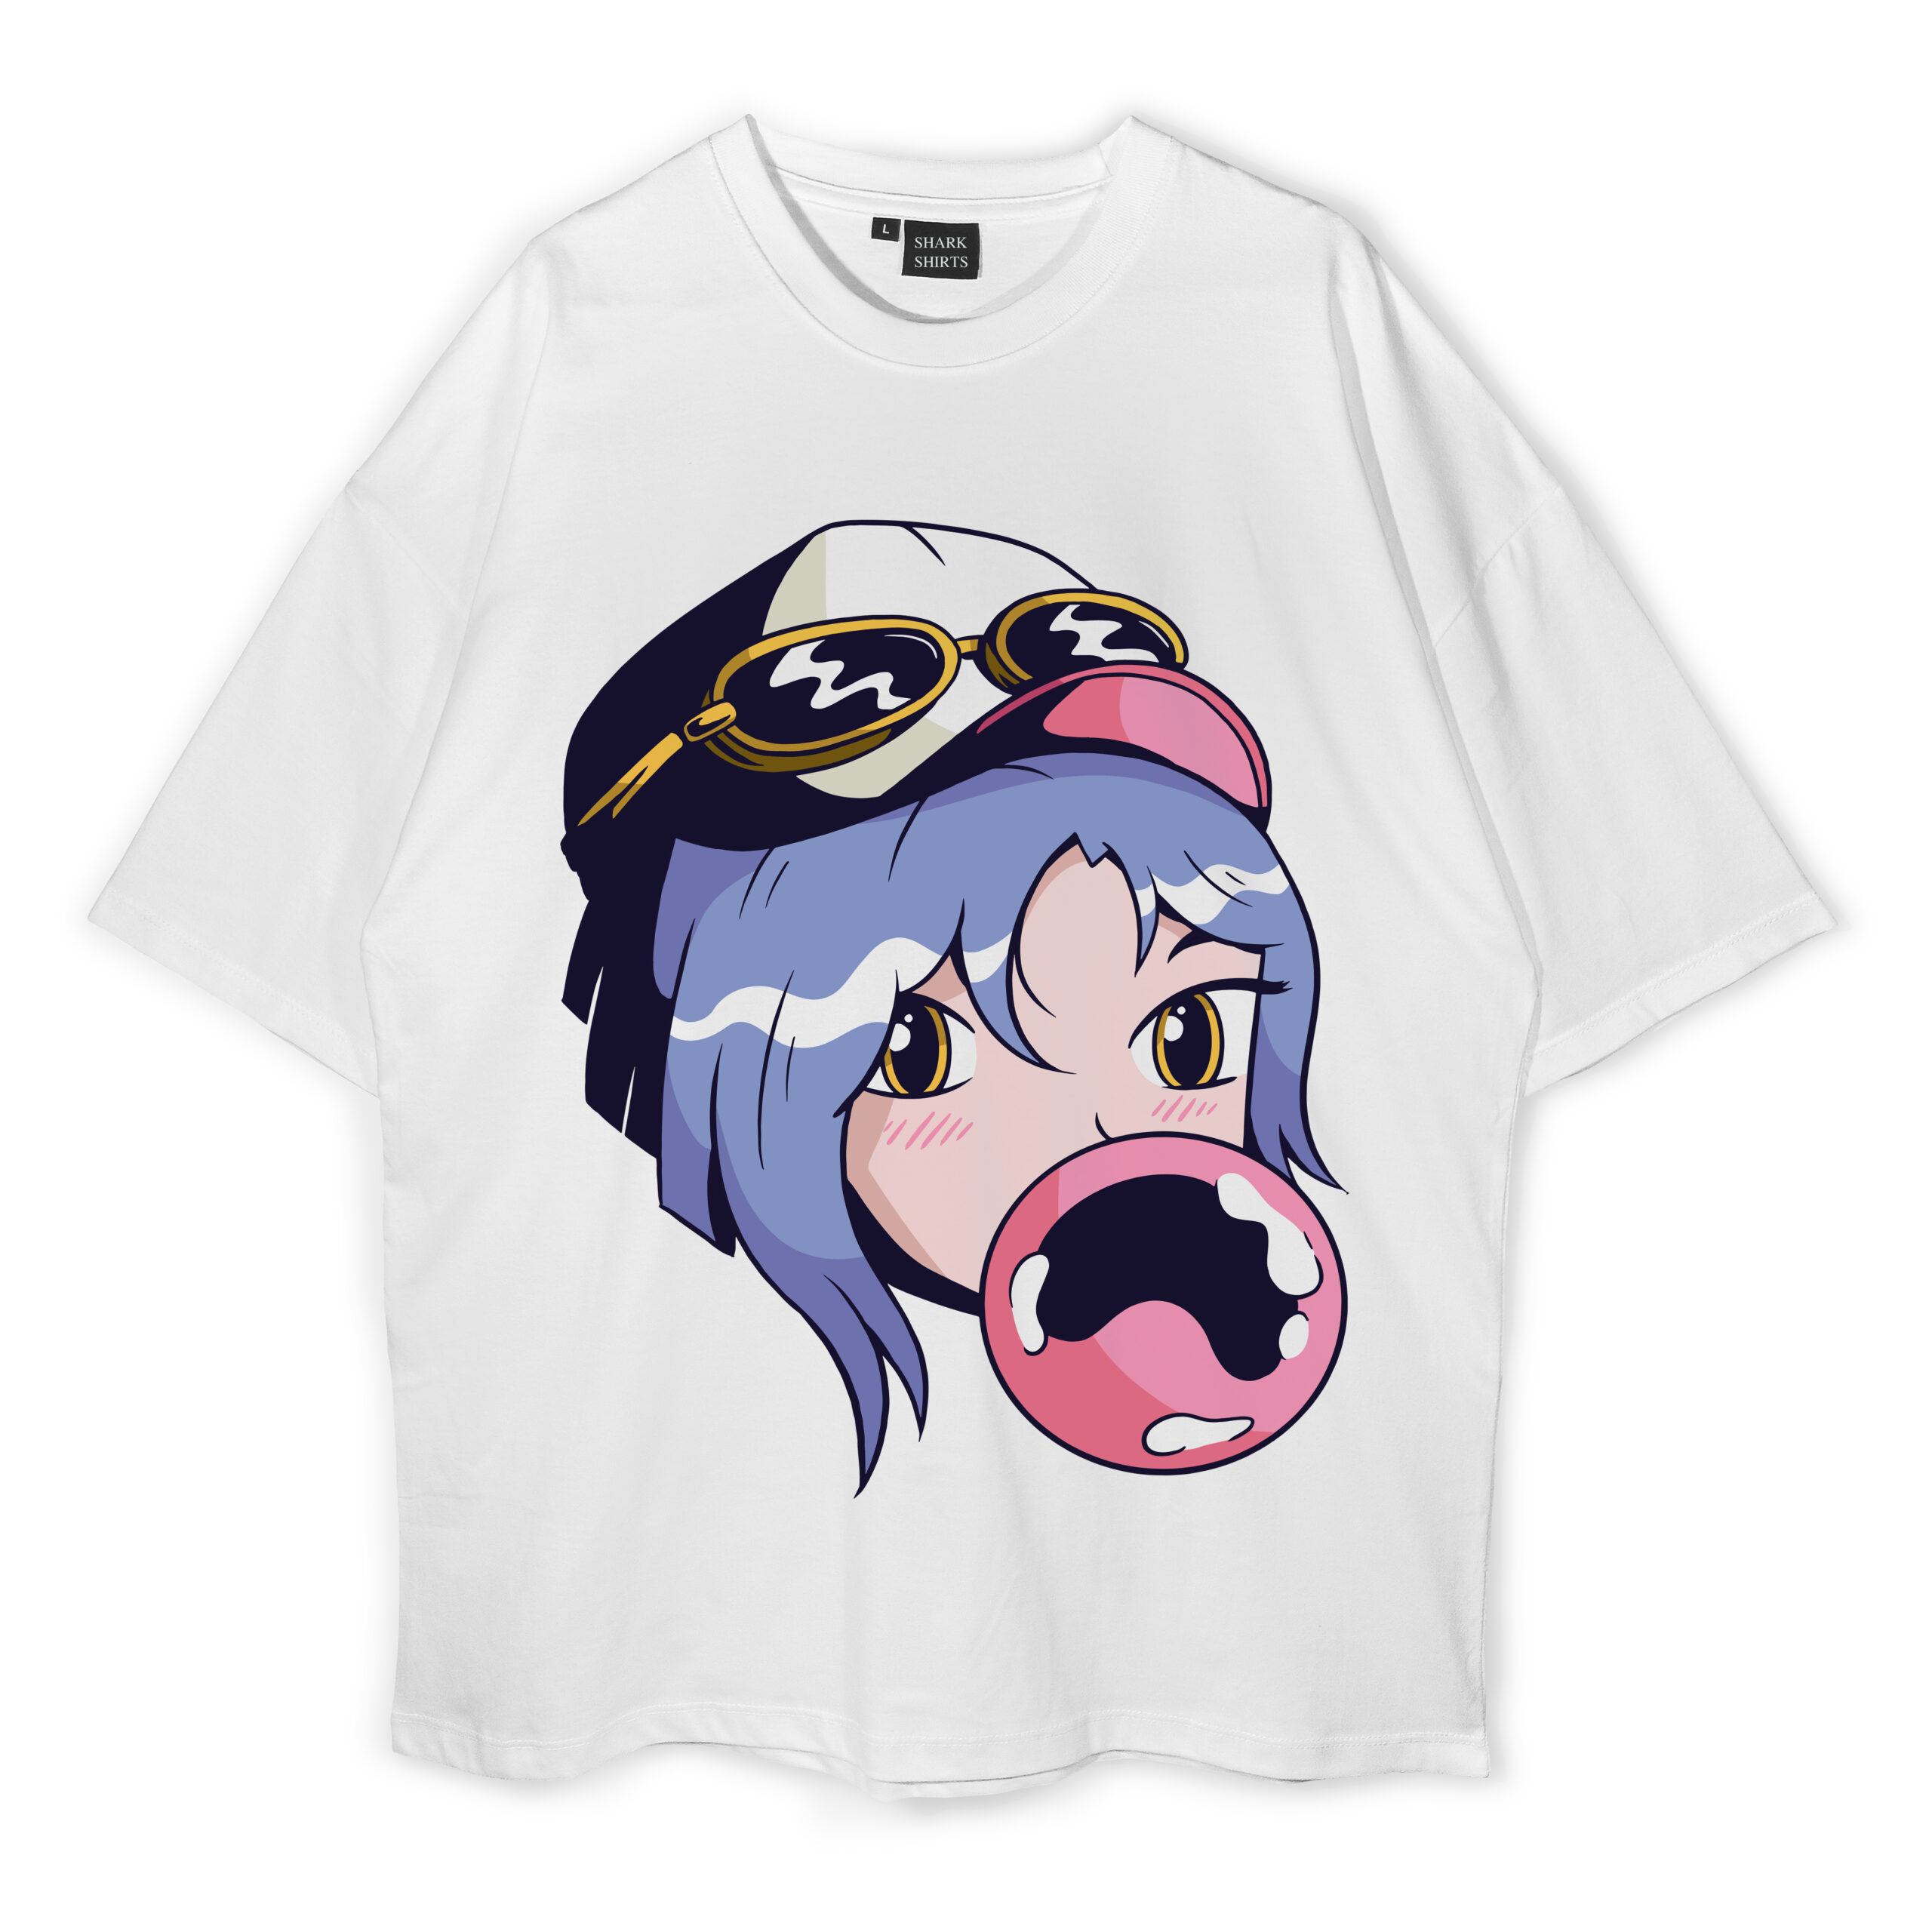 Japanese Style Anime Girls Shirt  Anime Clothes Girls Shirt  Anime Tshirt  Short  Aliexpress